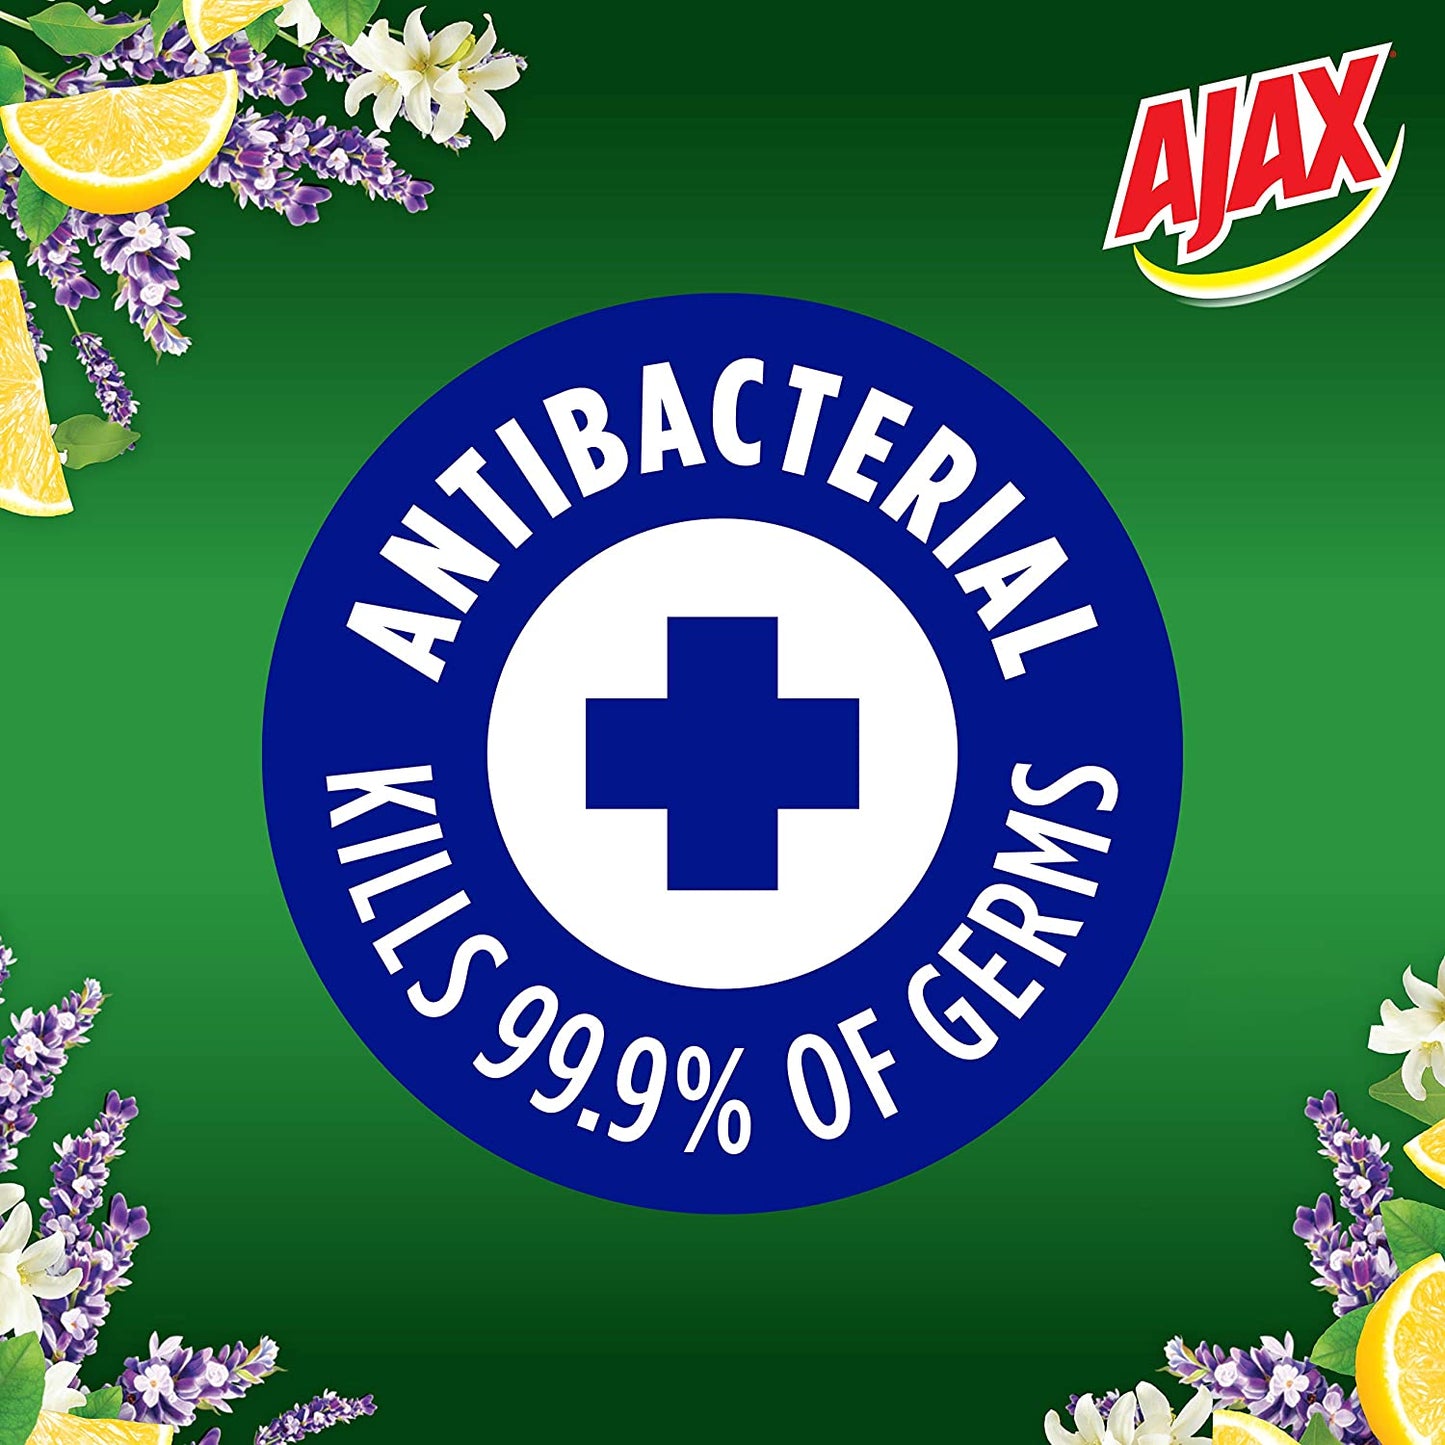 Ajax Spray n' Wipe Multi-Purpose Cleaner Trigger, Antibacterial Disinfectant, 500mL, Lavender & Citrus